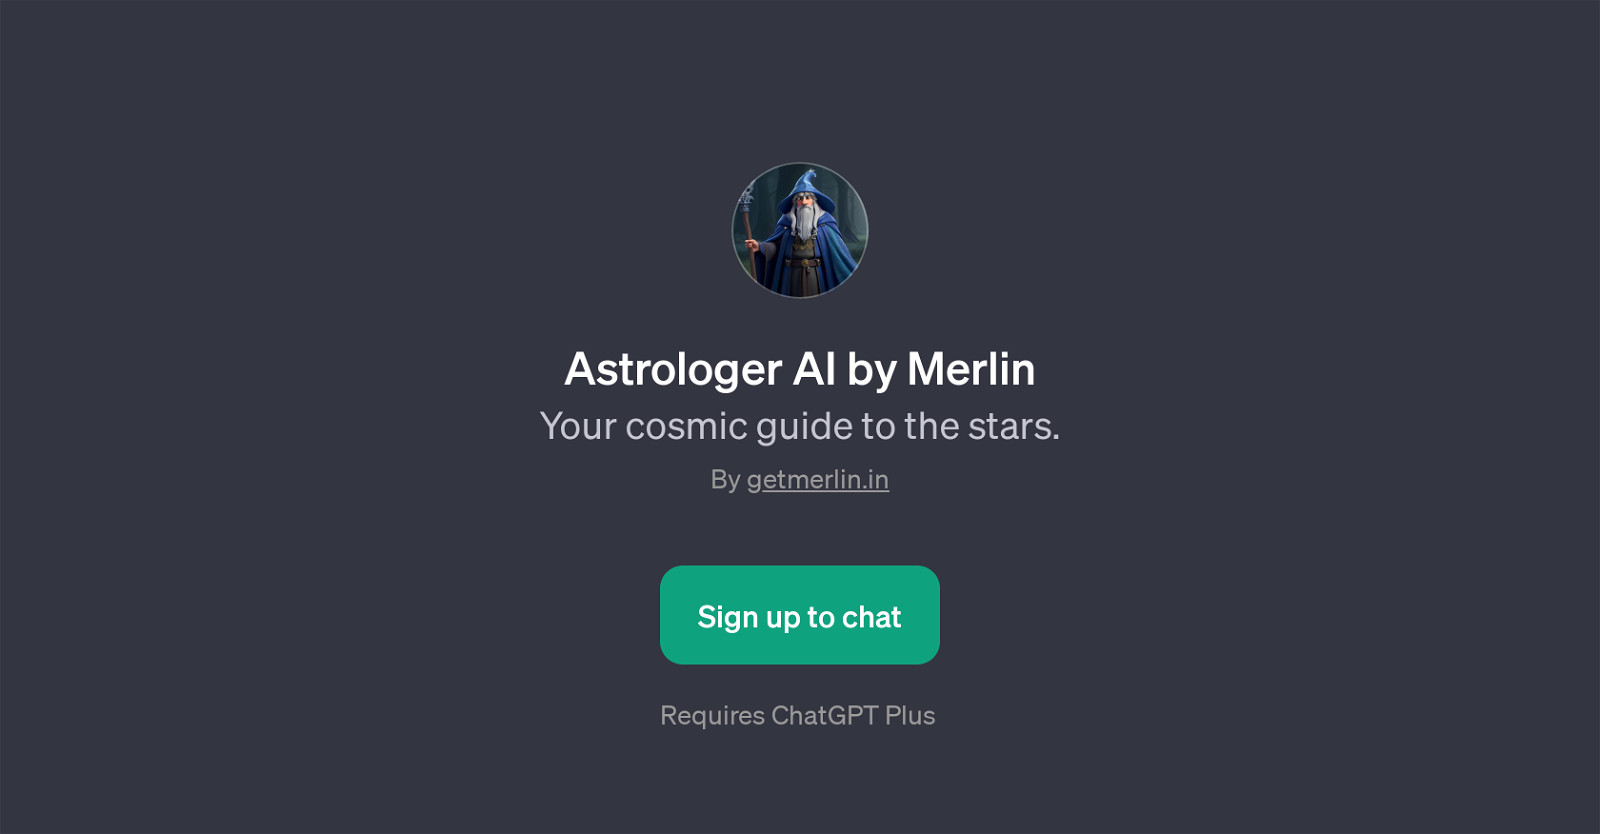 Astrologer AI by Merlin website